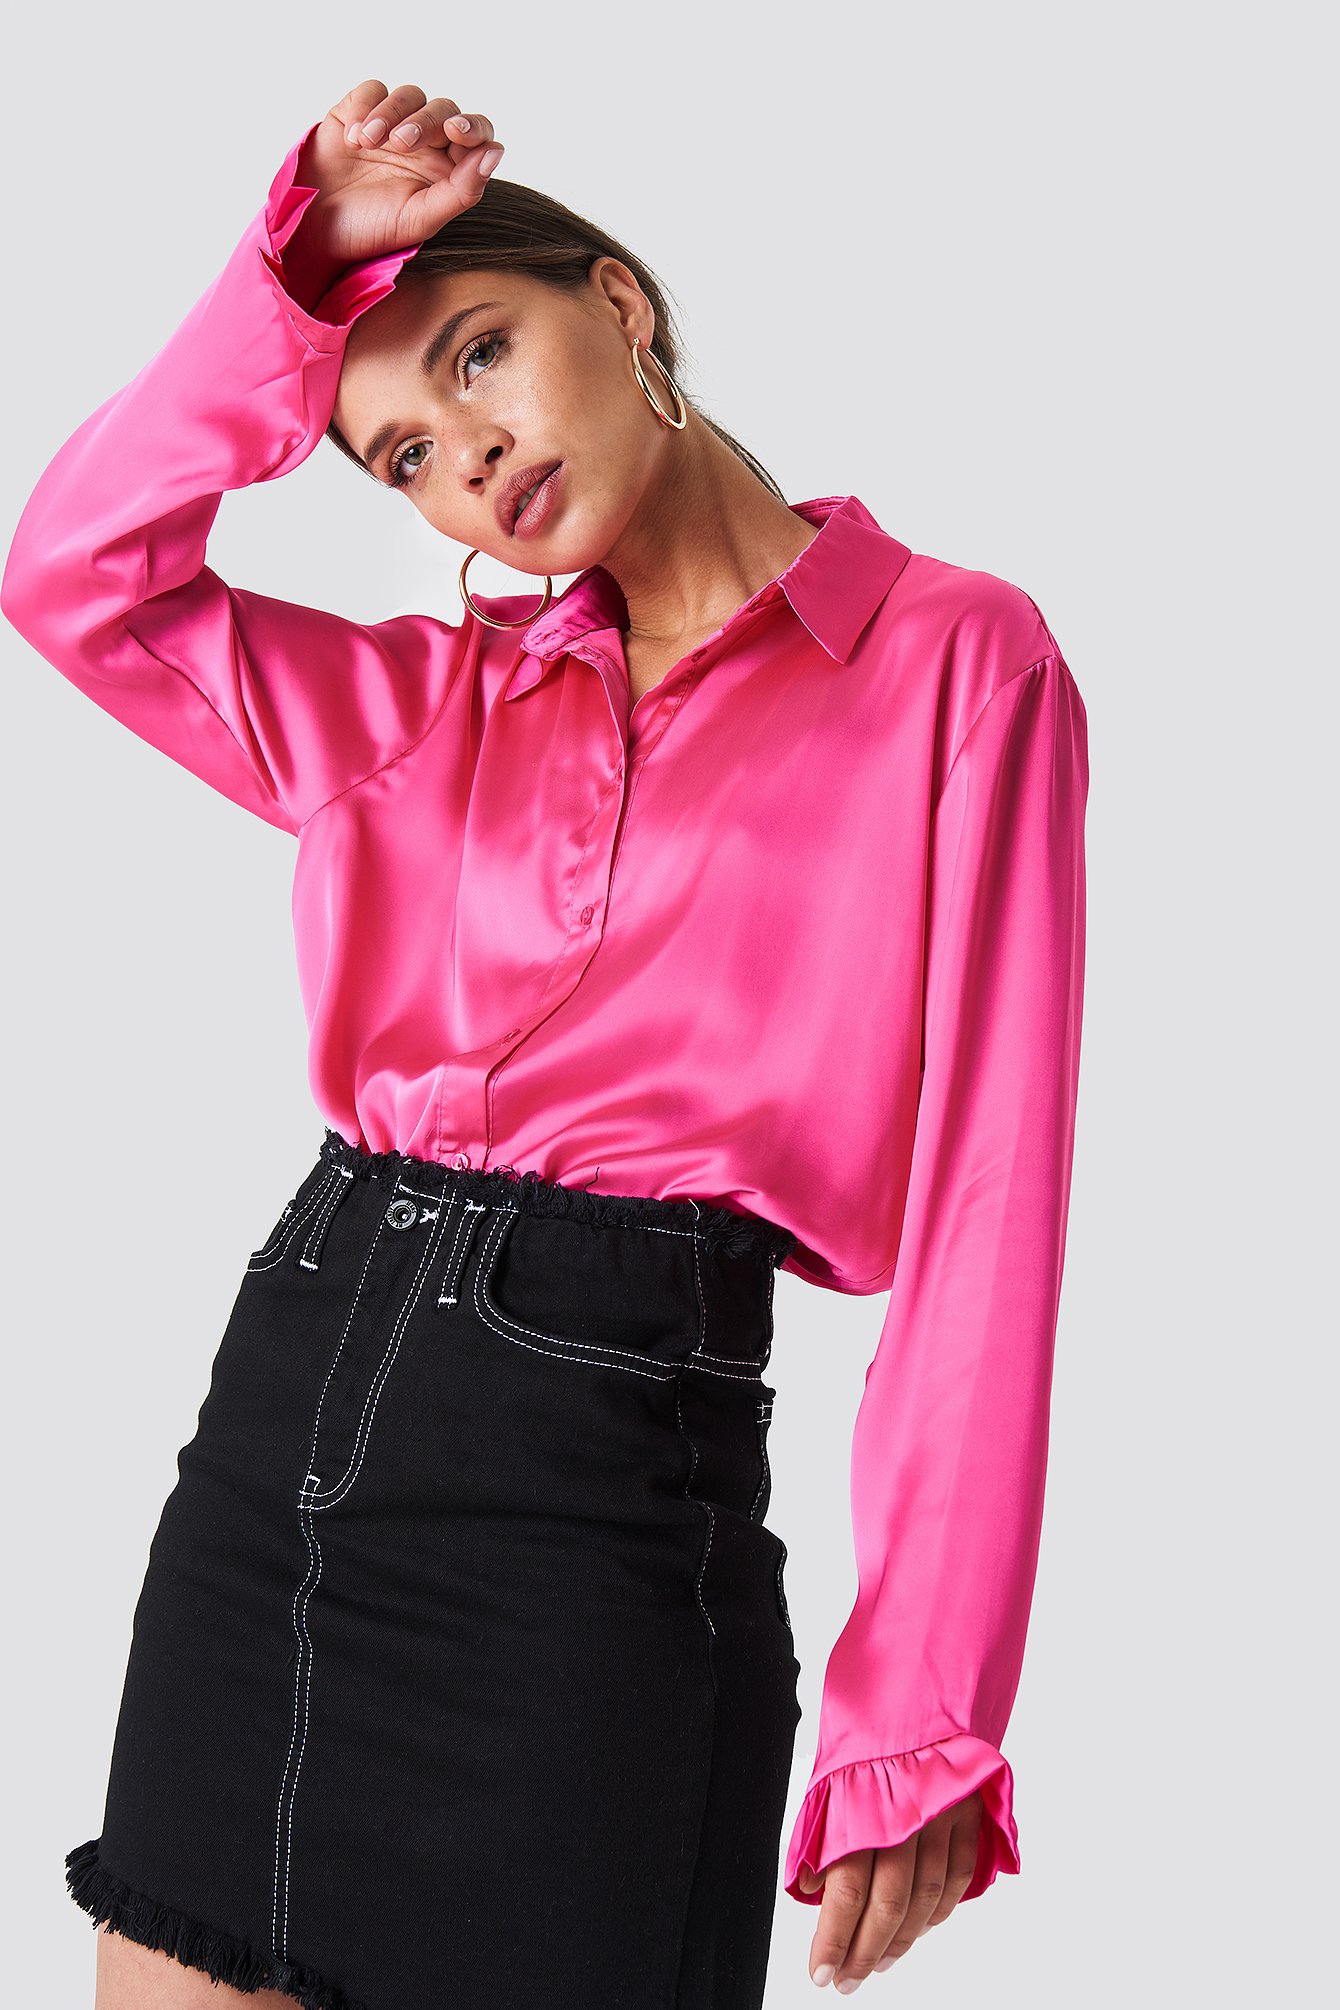 pink satin shirt womens